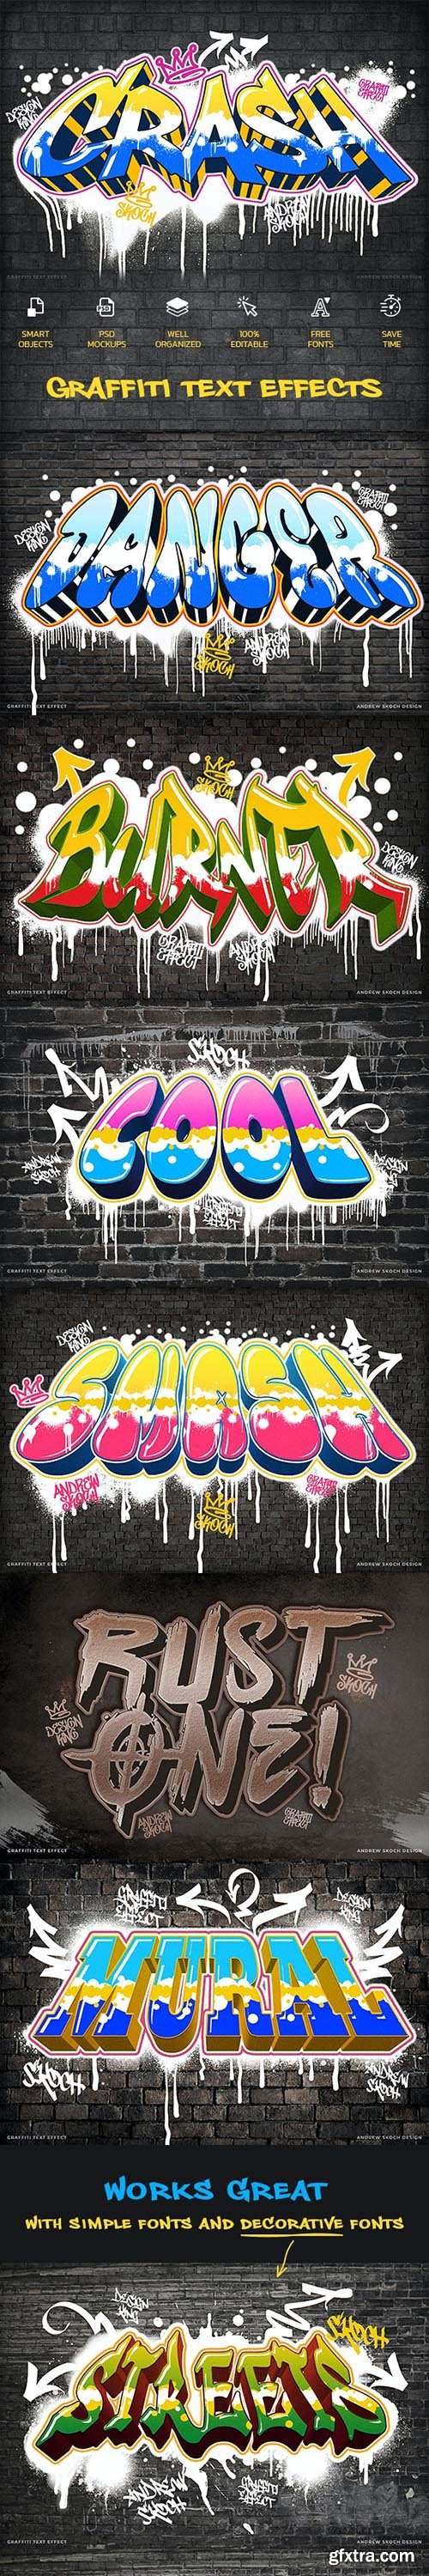 GraphicRiver - Graffiti Text Effects 35208099